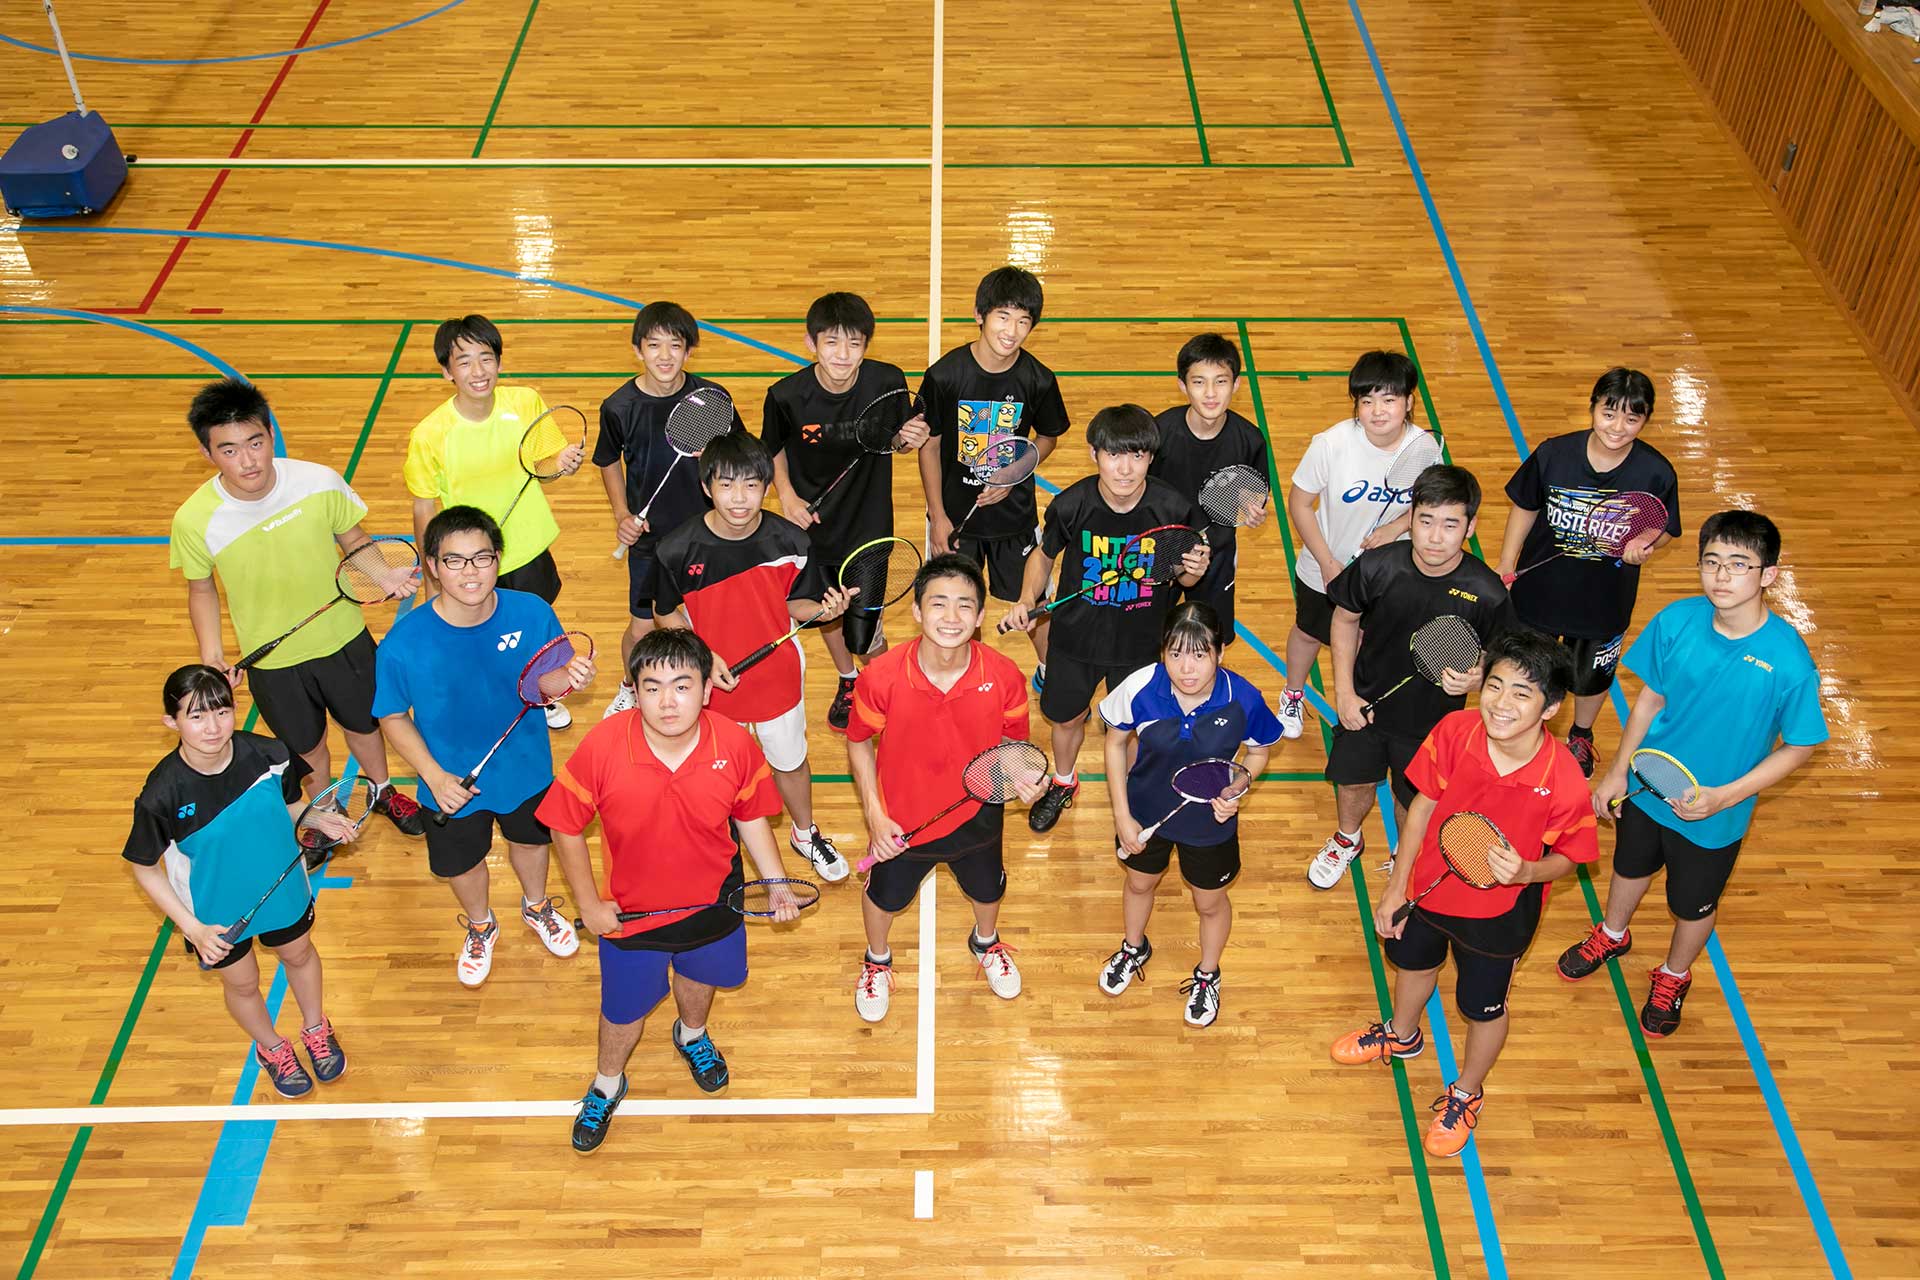 club/badminton-1